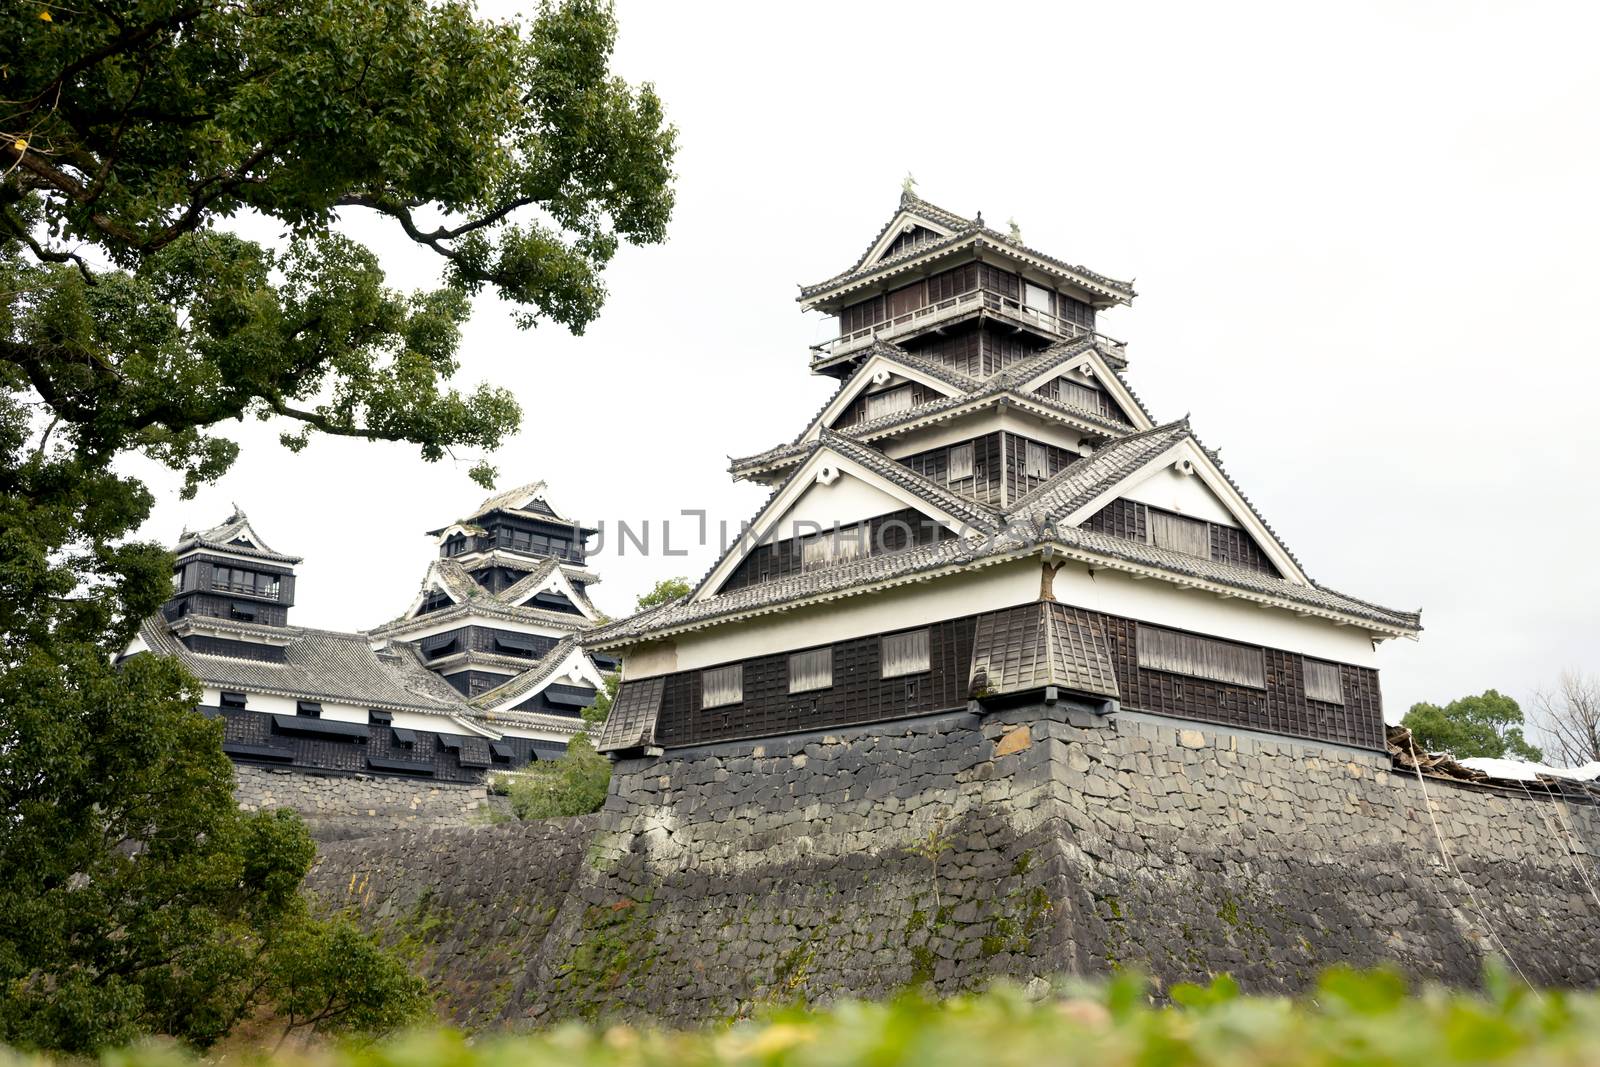 KUMAMOTO - DEC,16 : Landscape of Kumamoto castle, a hilltop Japa by ekachailo